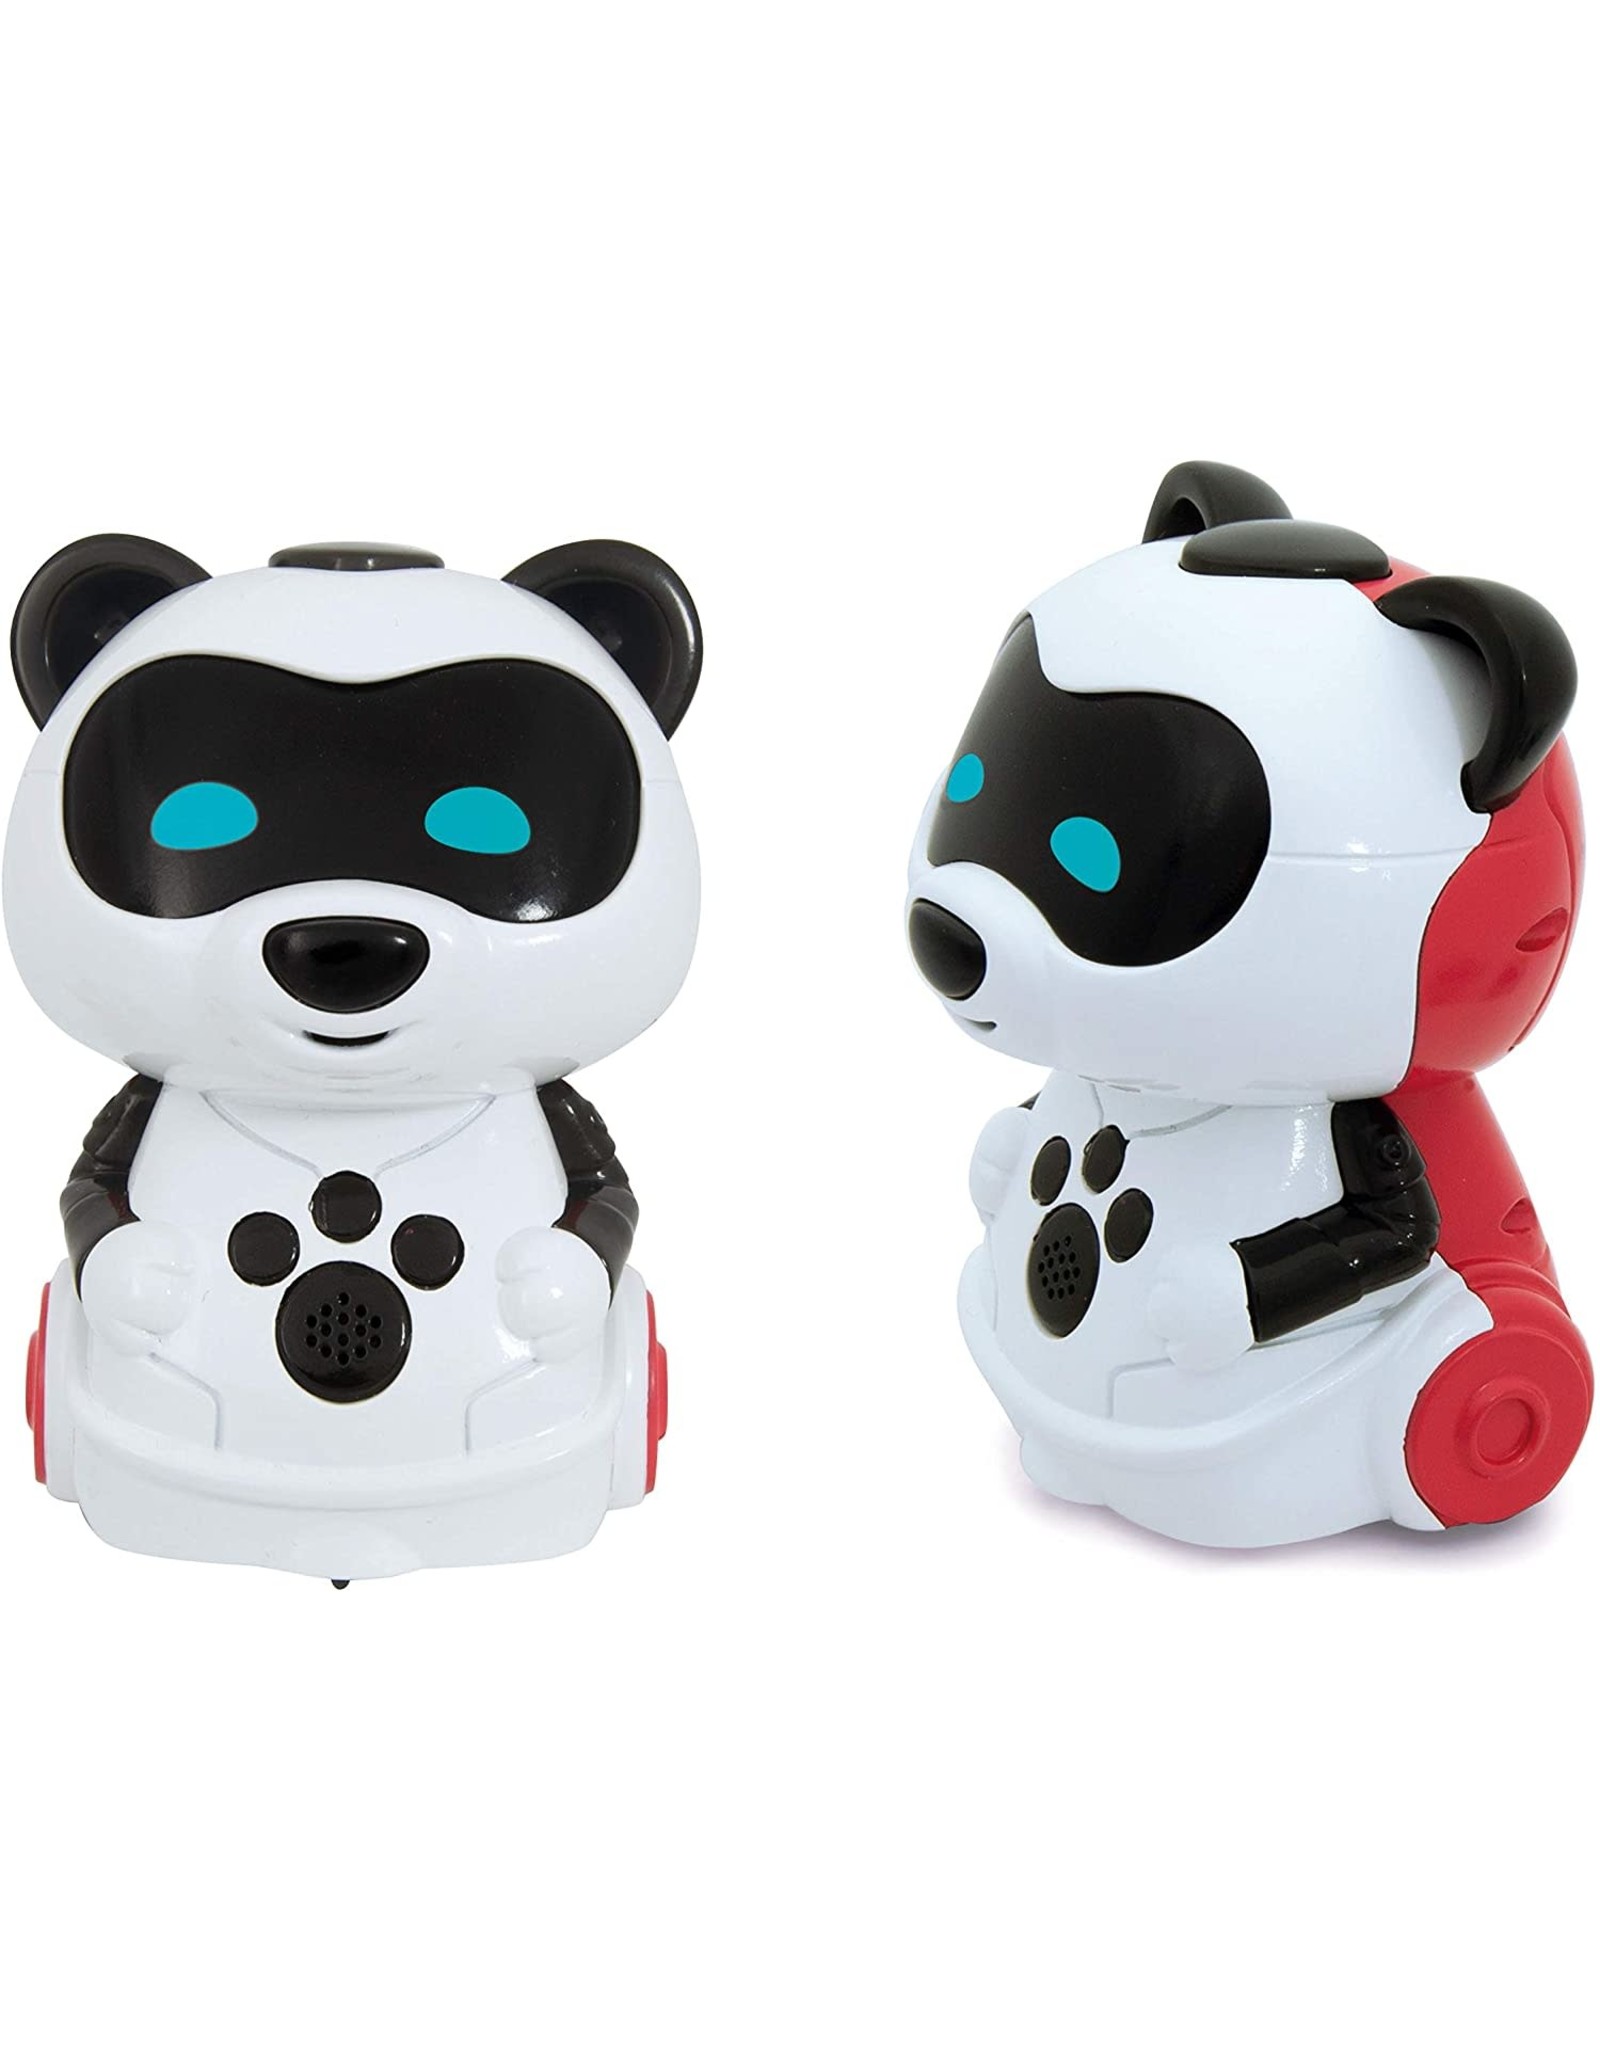 Clementoni Pet Bits Panda Interactive Collectible Robot - 12098